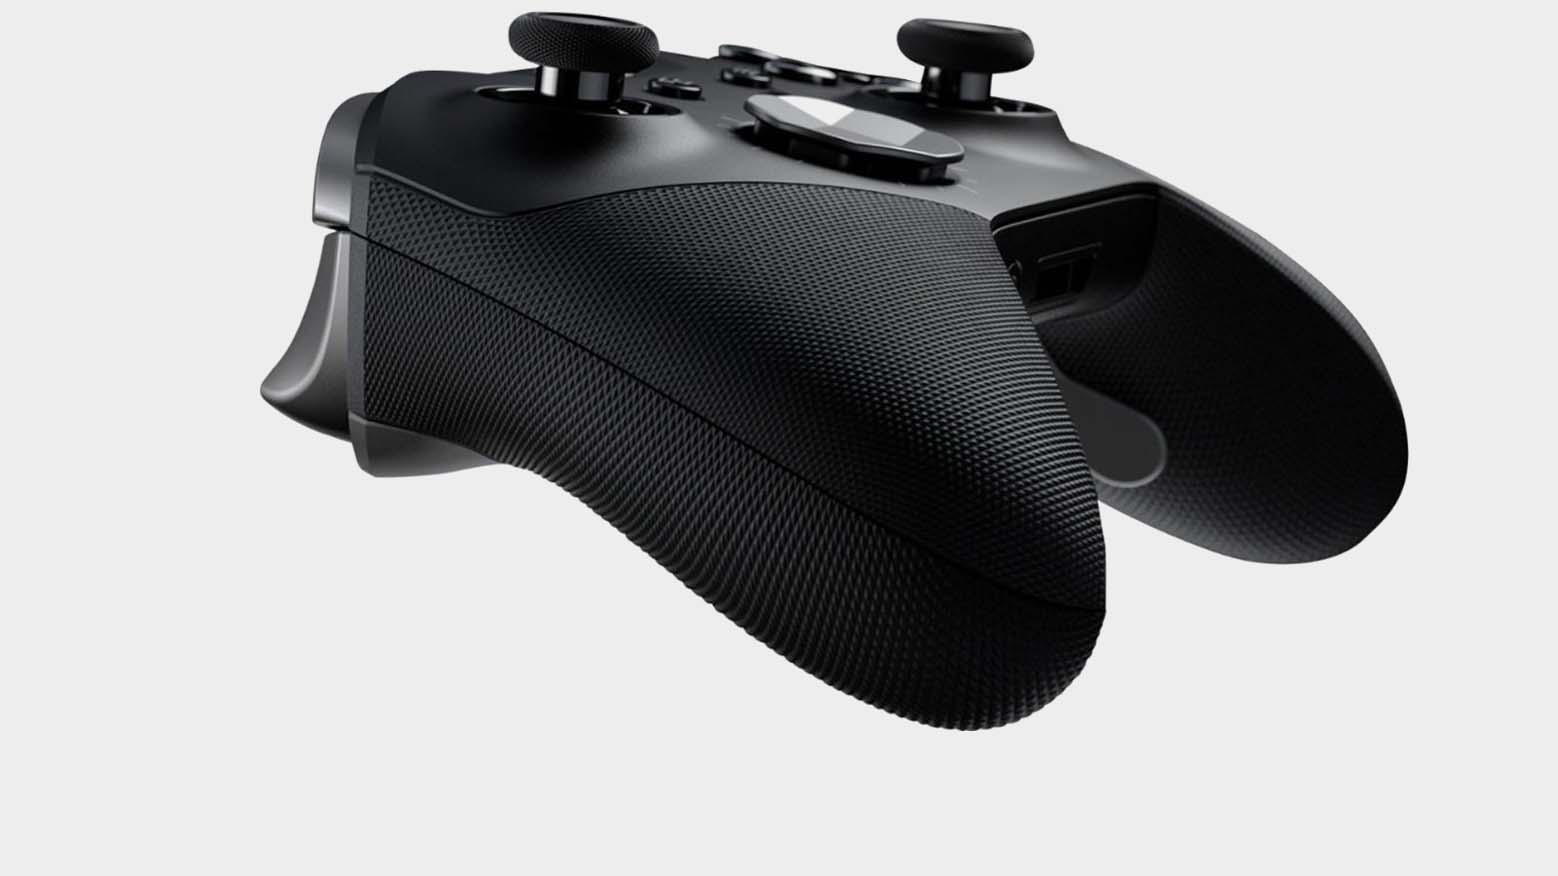 Xbox Elite Wireless Controller Series 2 on a grey background.